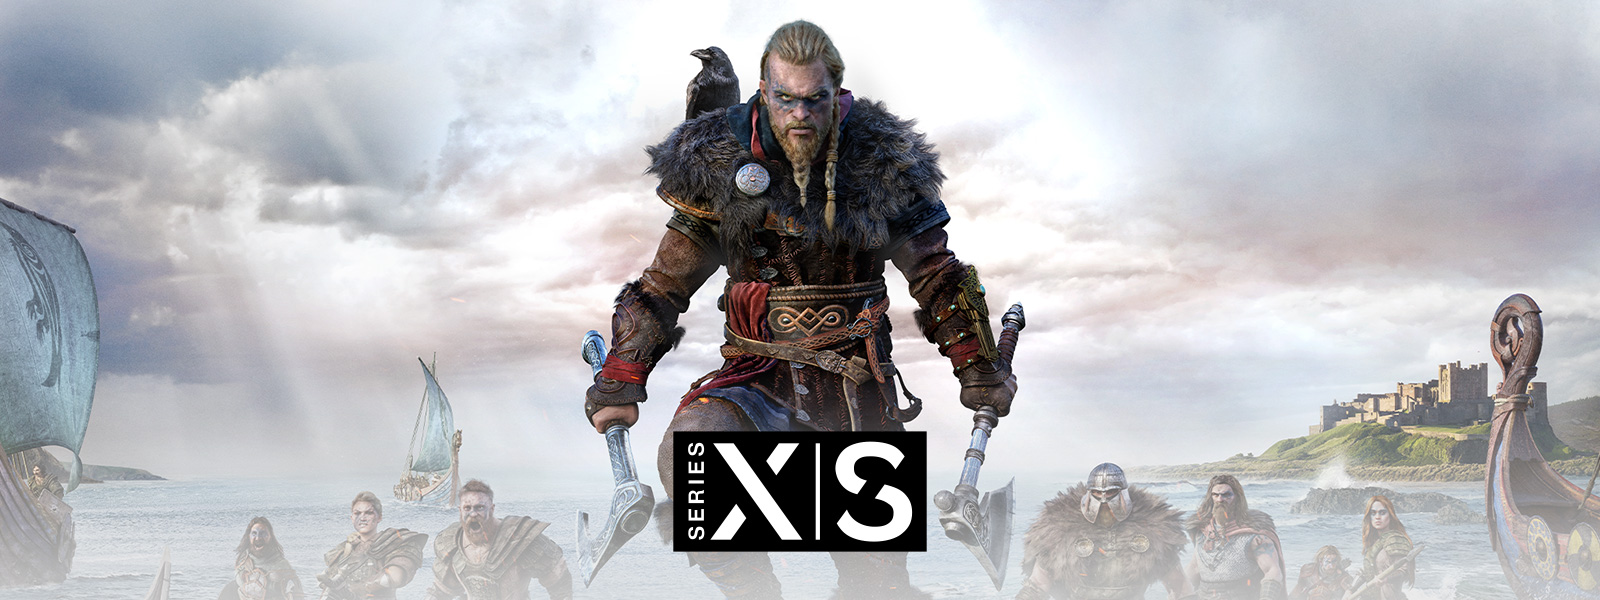 Assassin's Creed Valhalla, Xbox Series X|S, Den legendariske viking Eivor leder sin hær i kamp.